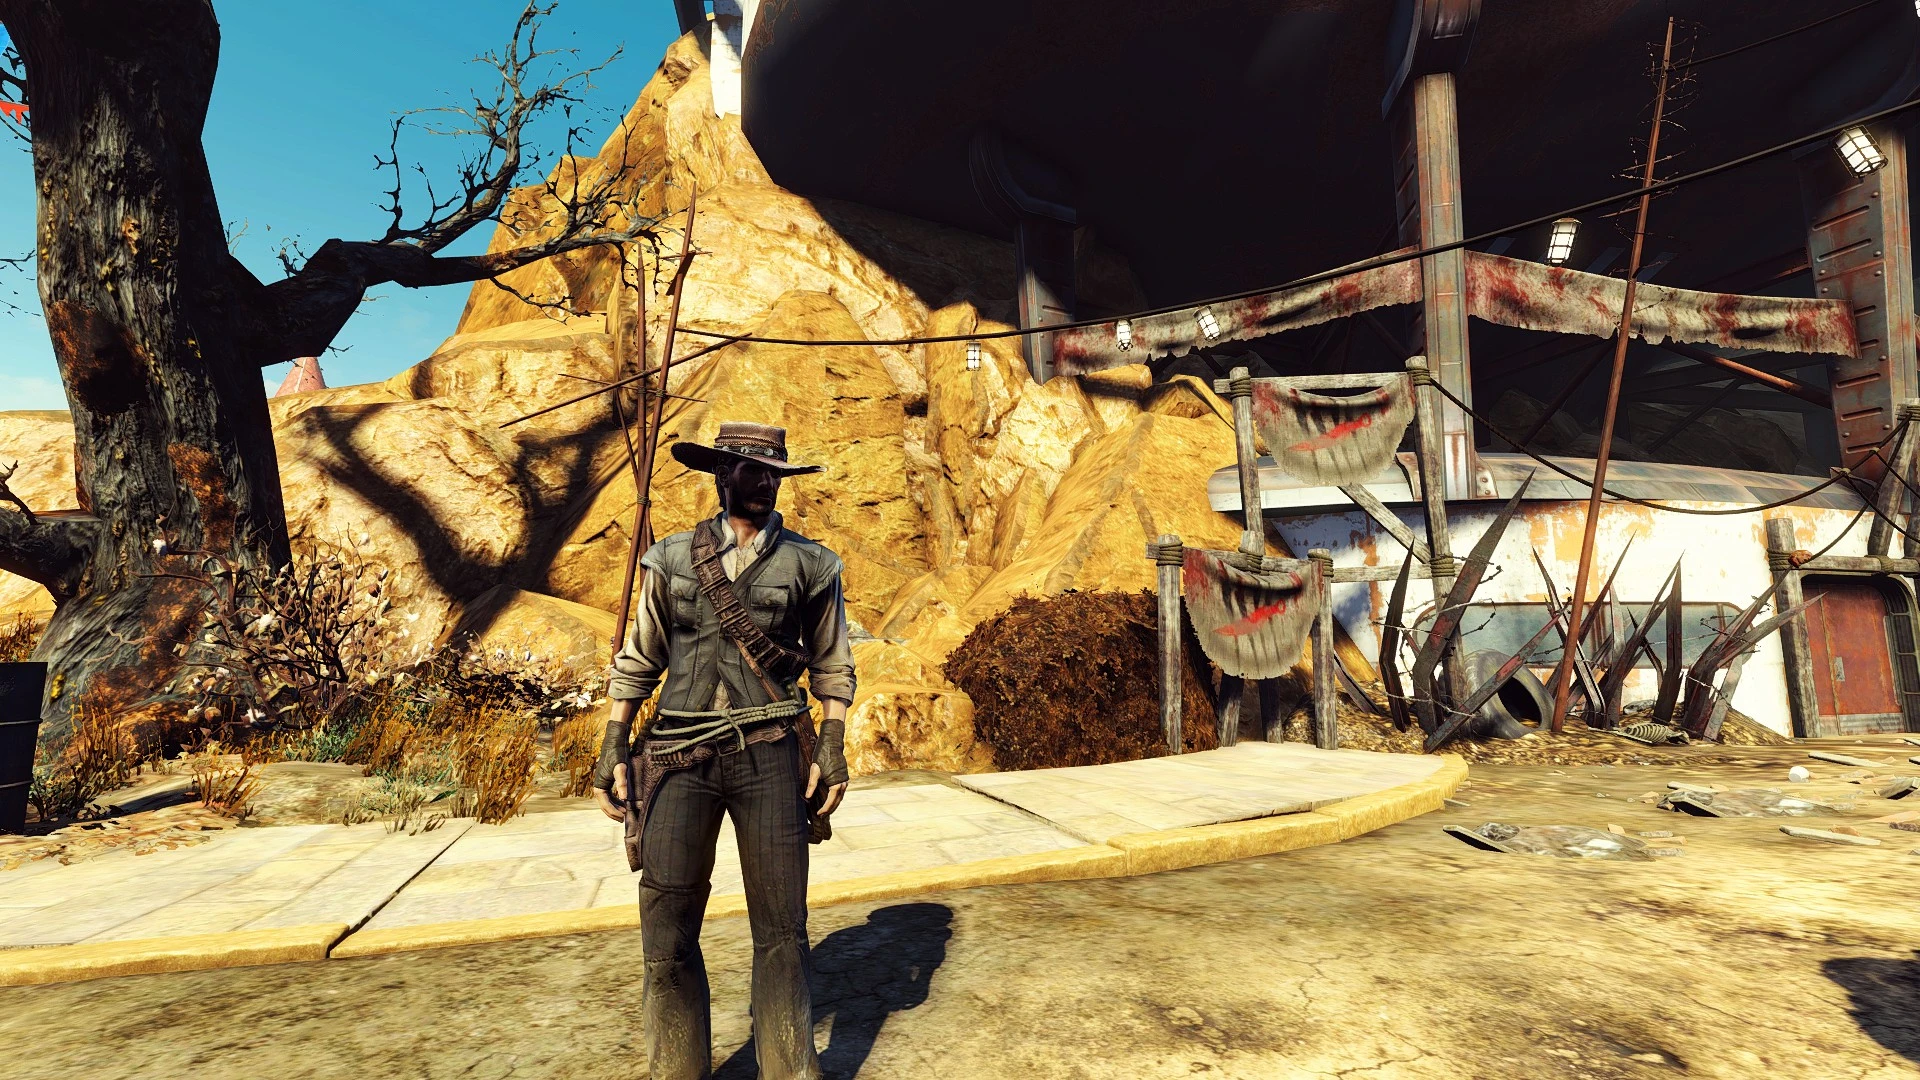 Fallout ковбой. Fallout 4 Cowboy. Fallout 4 Cowboy outfit. Fallout New Vegas ковбой. Фоллаут 4 ковбойская одежда.